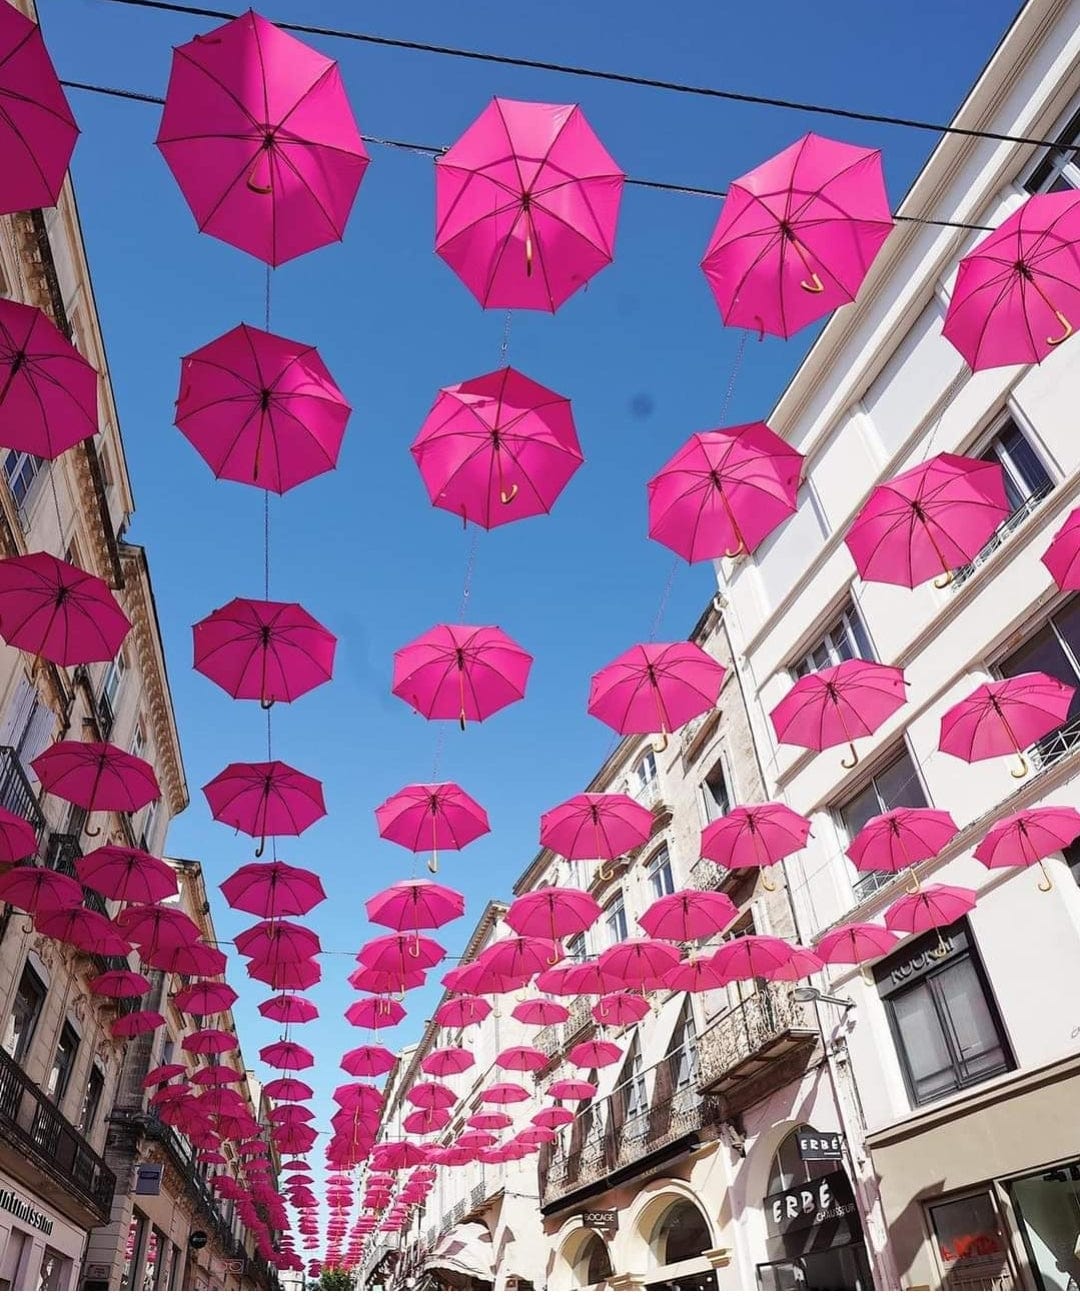 120 RS Per pc ON BUYING 🏷IN BULK decor umbrella LAMANSH Pink color umbrella's ☂️ for Breast Cancer Awareness October Month Event Decor